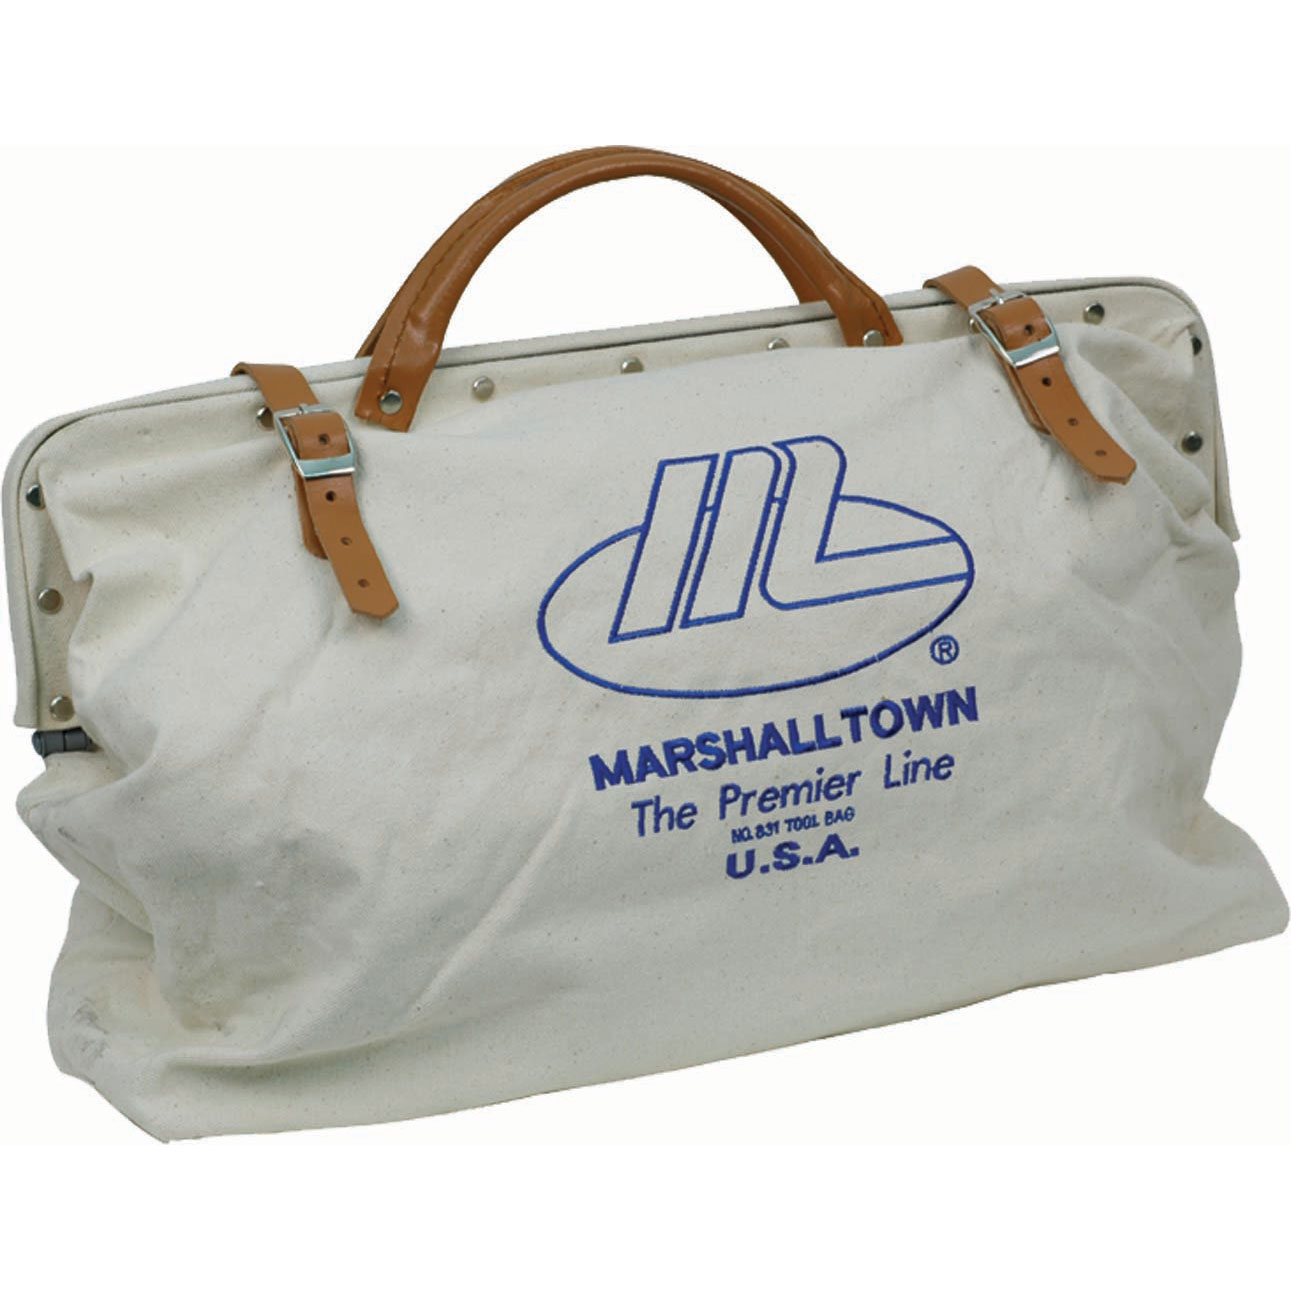 Marshalltown 831 20 x 15 Canvas Tool Bag MAT-831